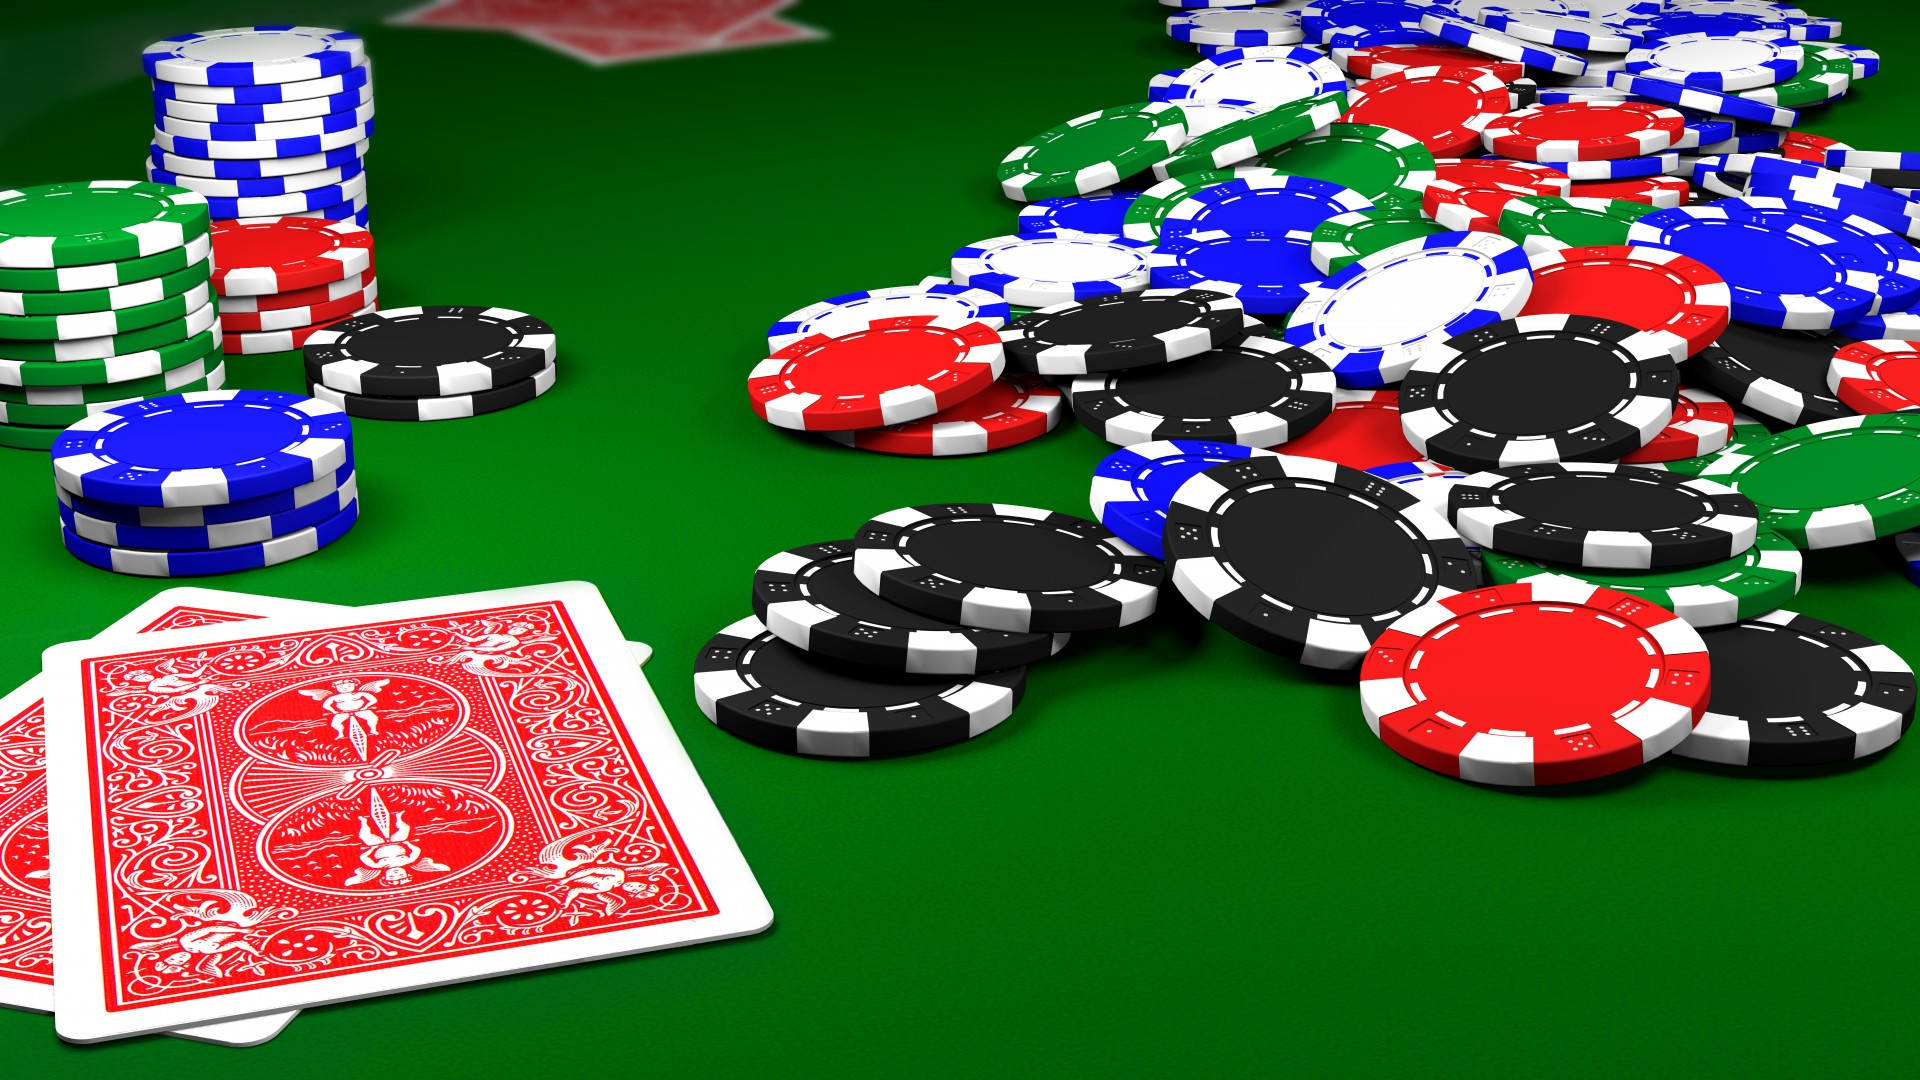 Poker Table Close-up Image Background